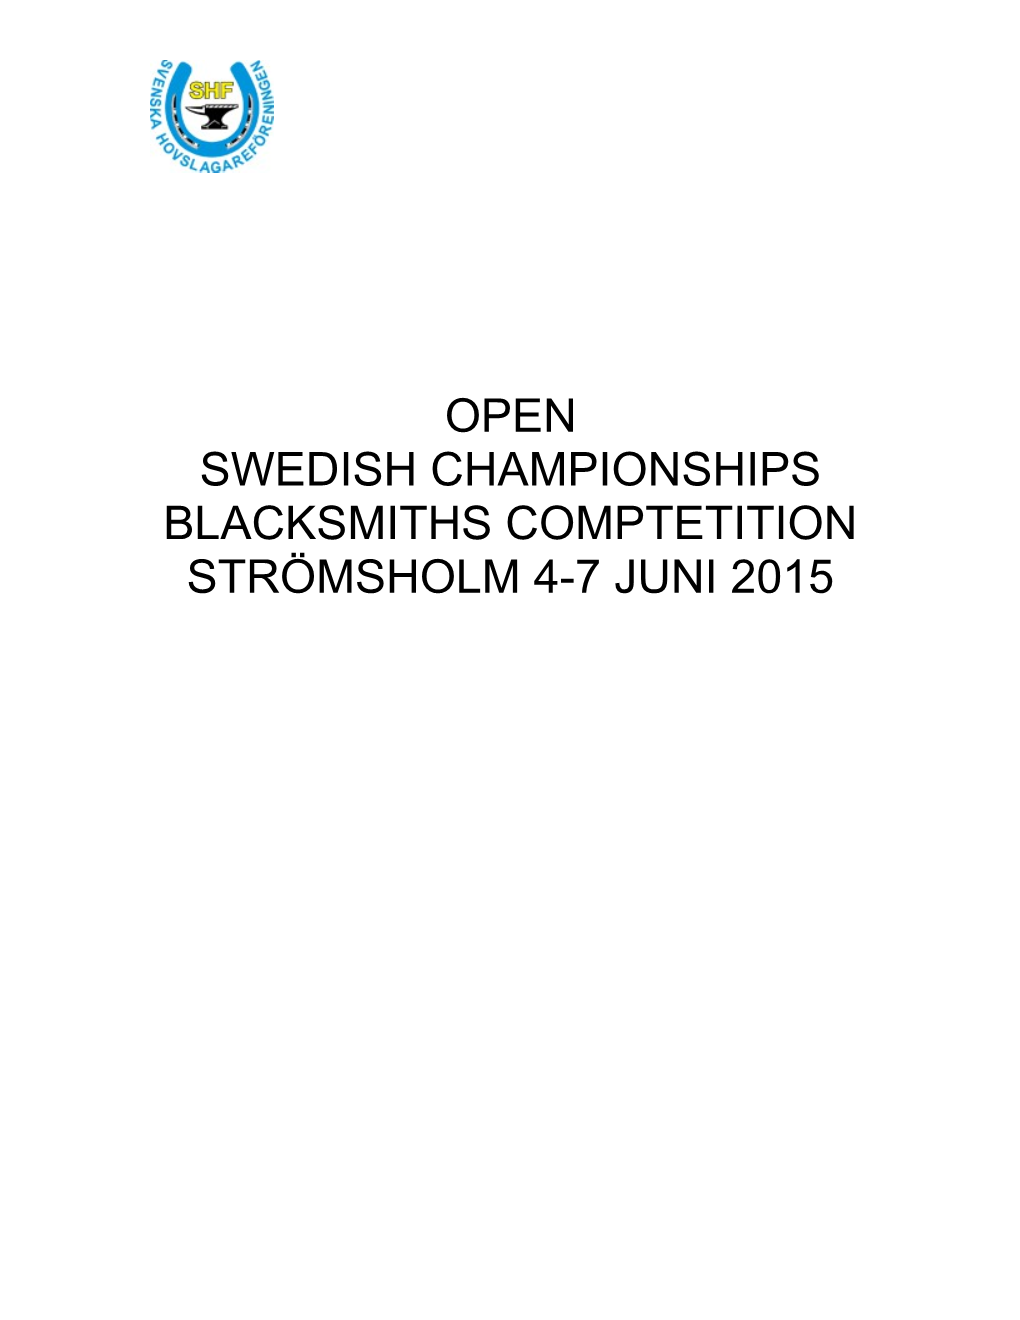 Swedish Championships